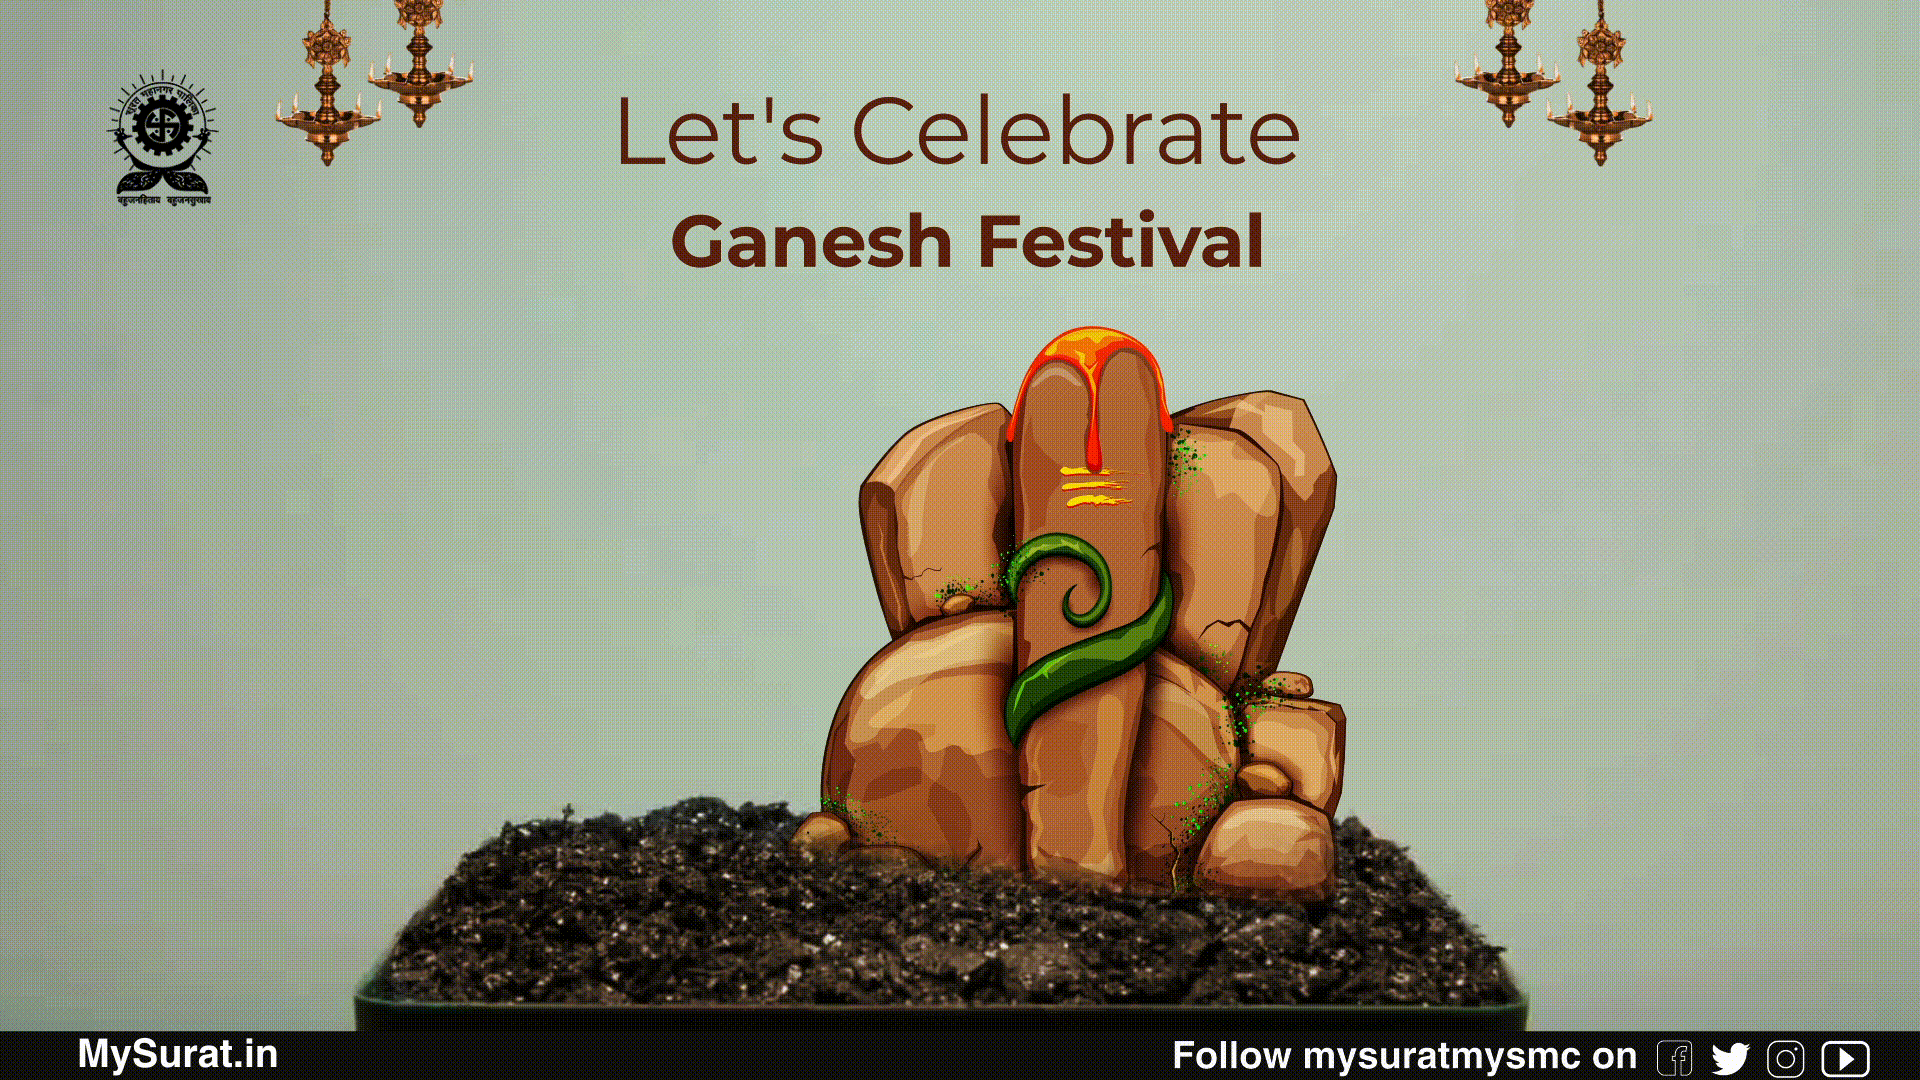 Let's Celebrate Nature-friendly Ganesh Festival